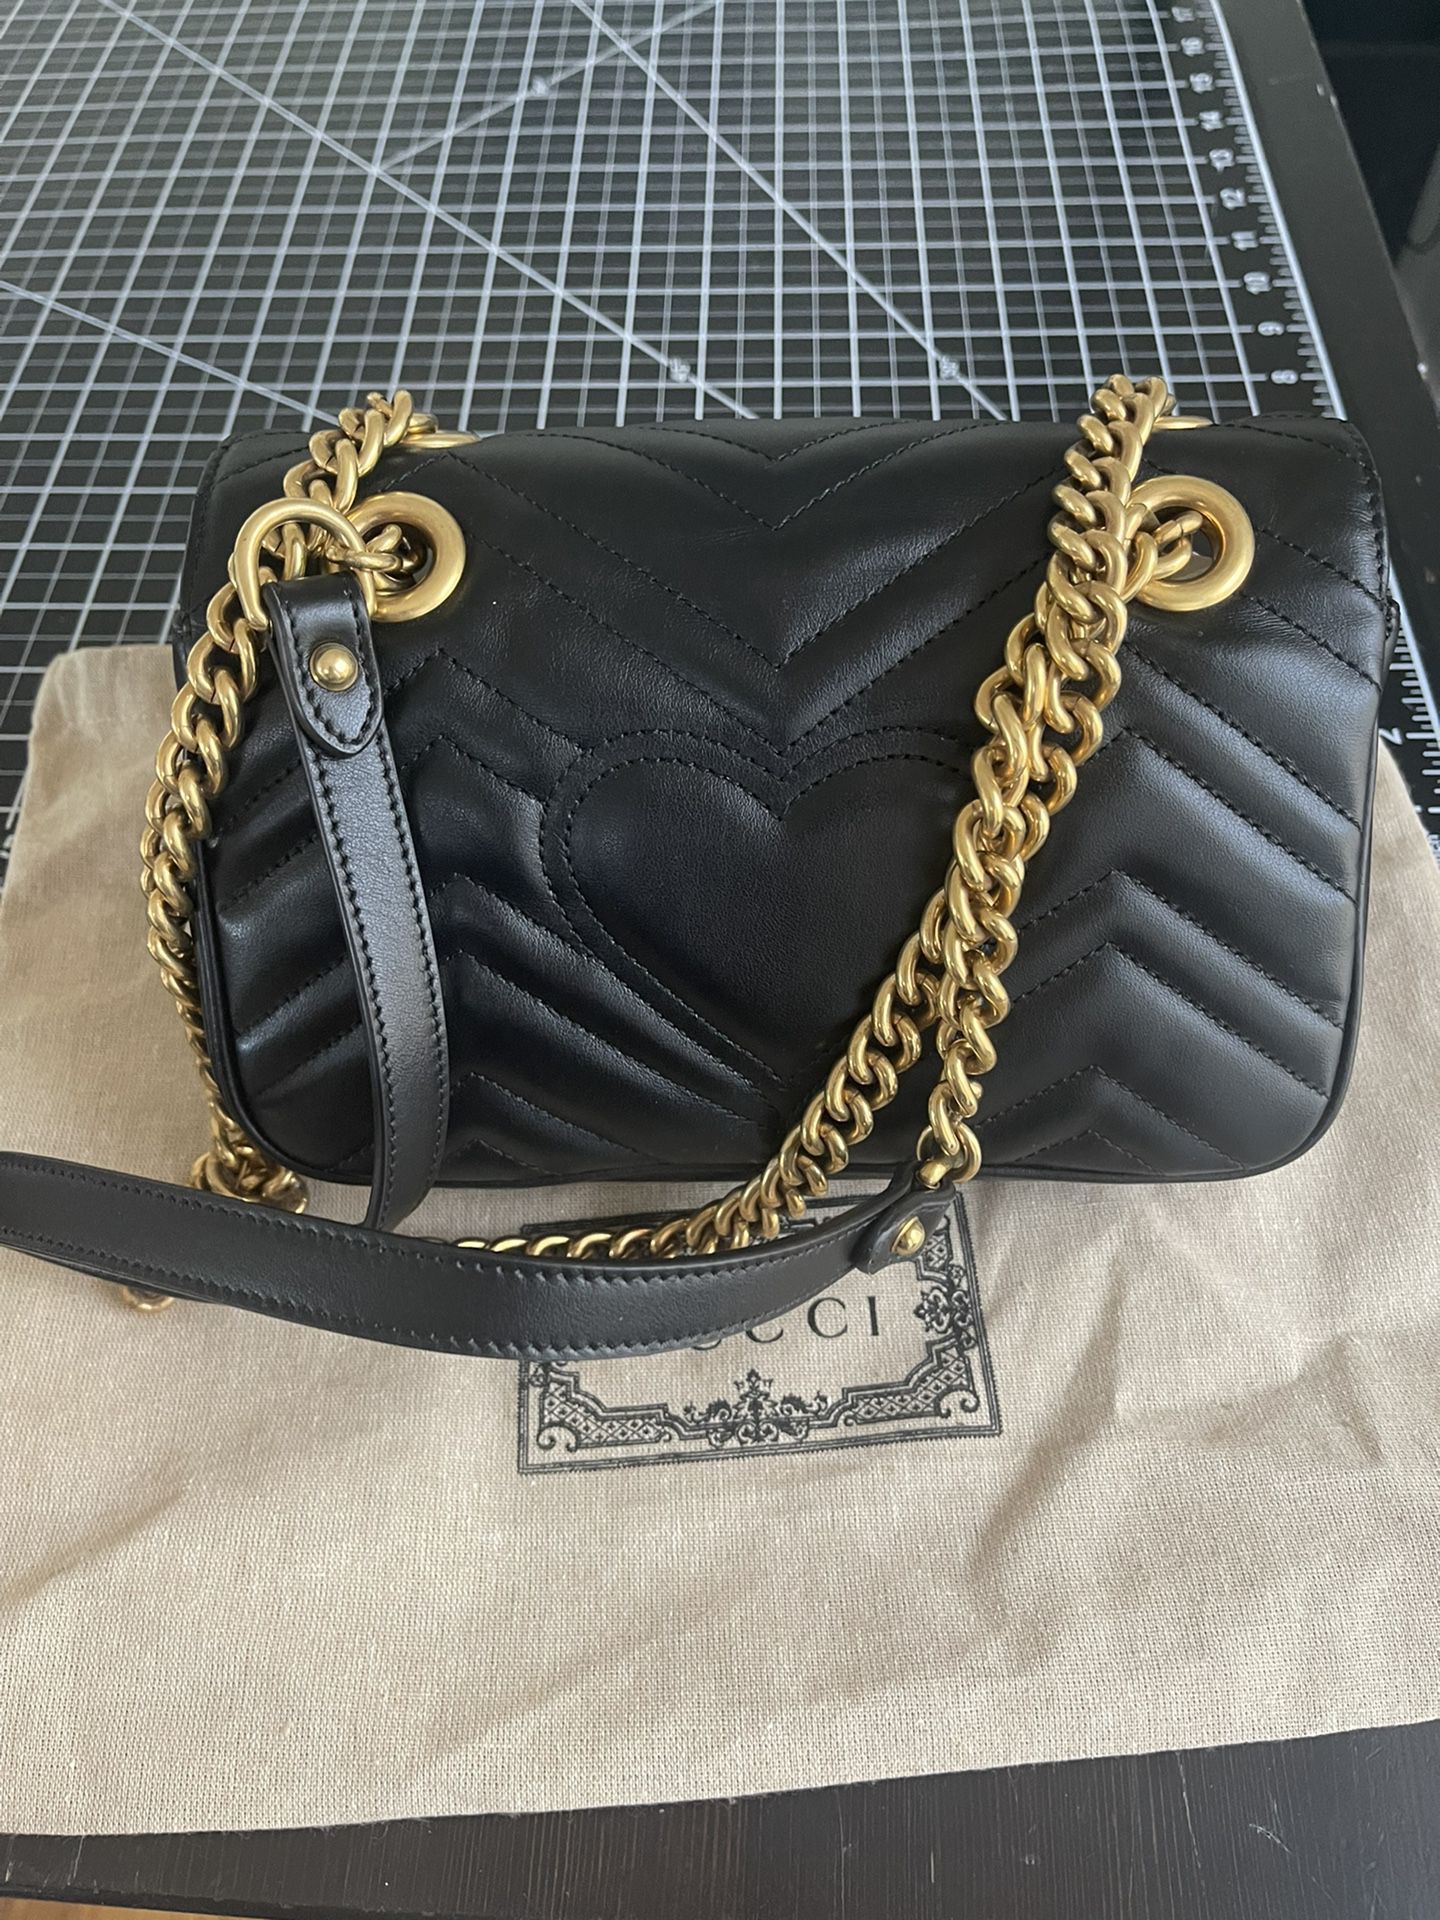 GUCCI GG Marmont Small Shoulder Bag, Black, velvet for Sale in San Antonio,  TX - OfferUp